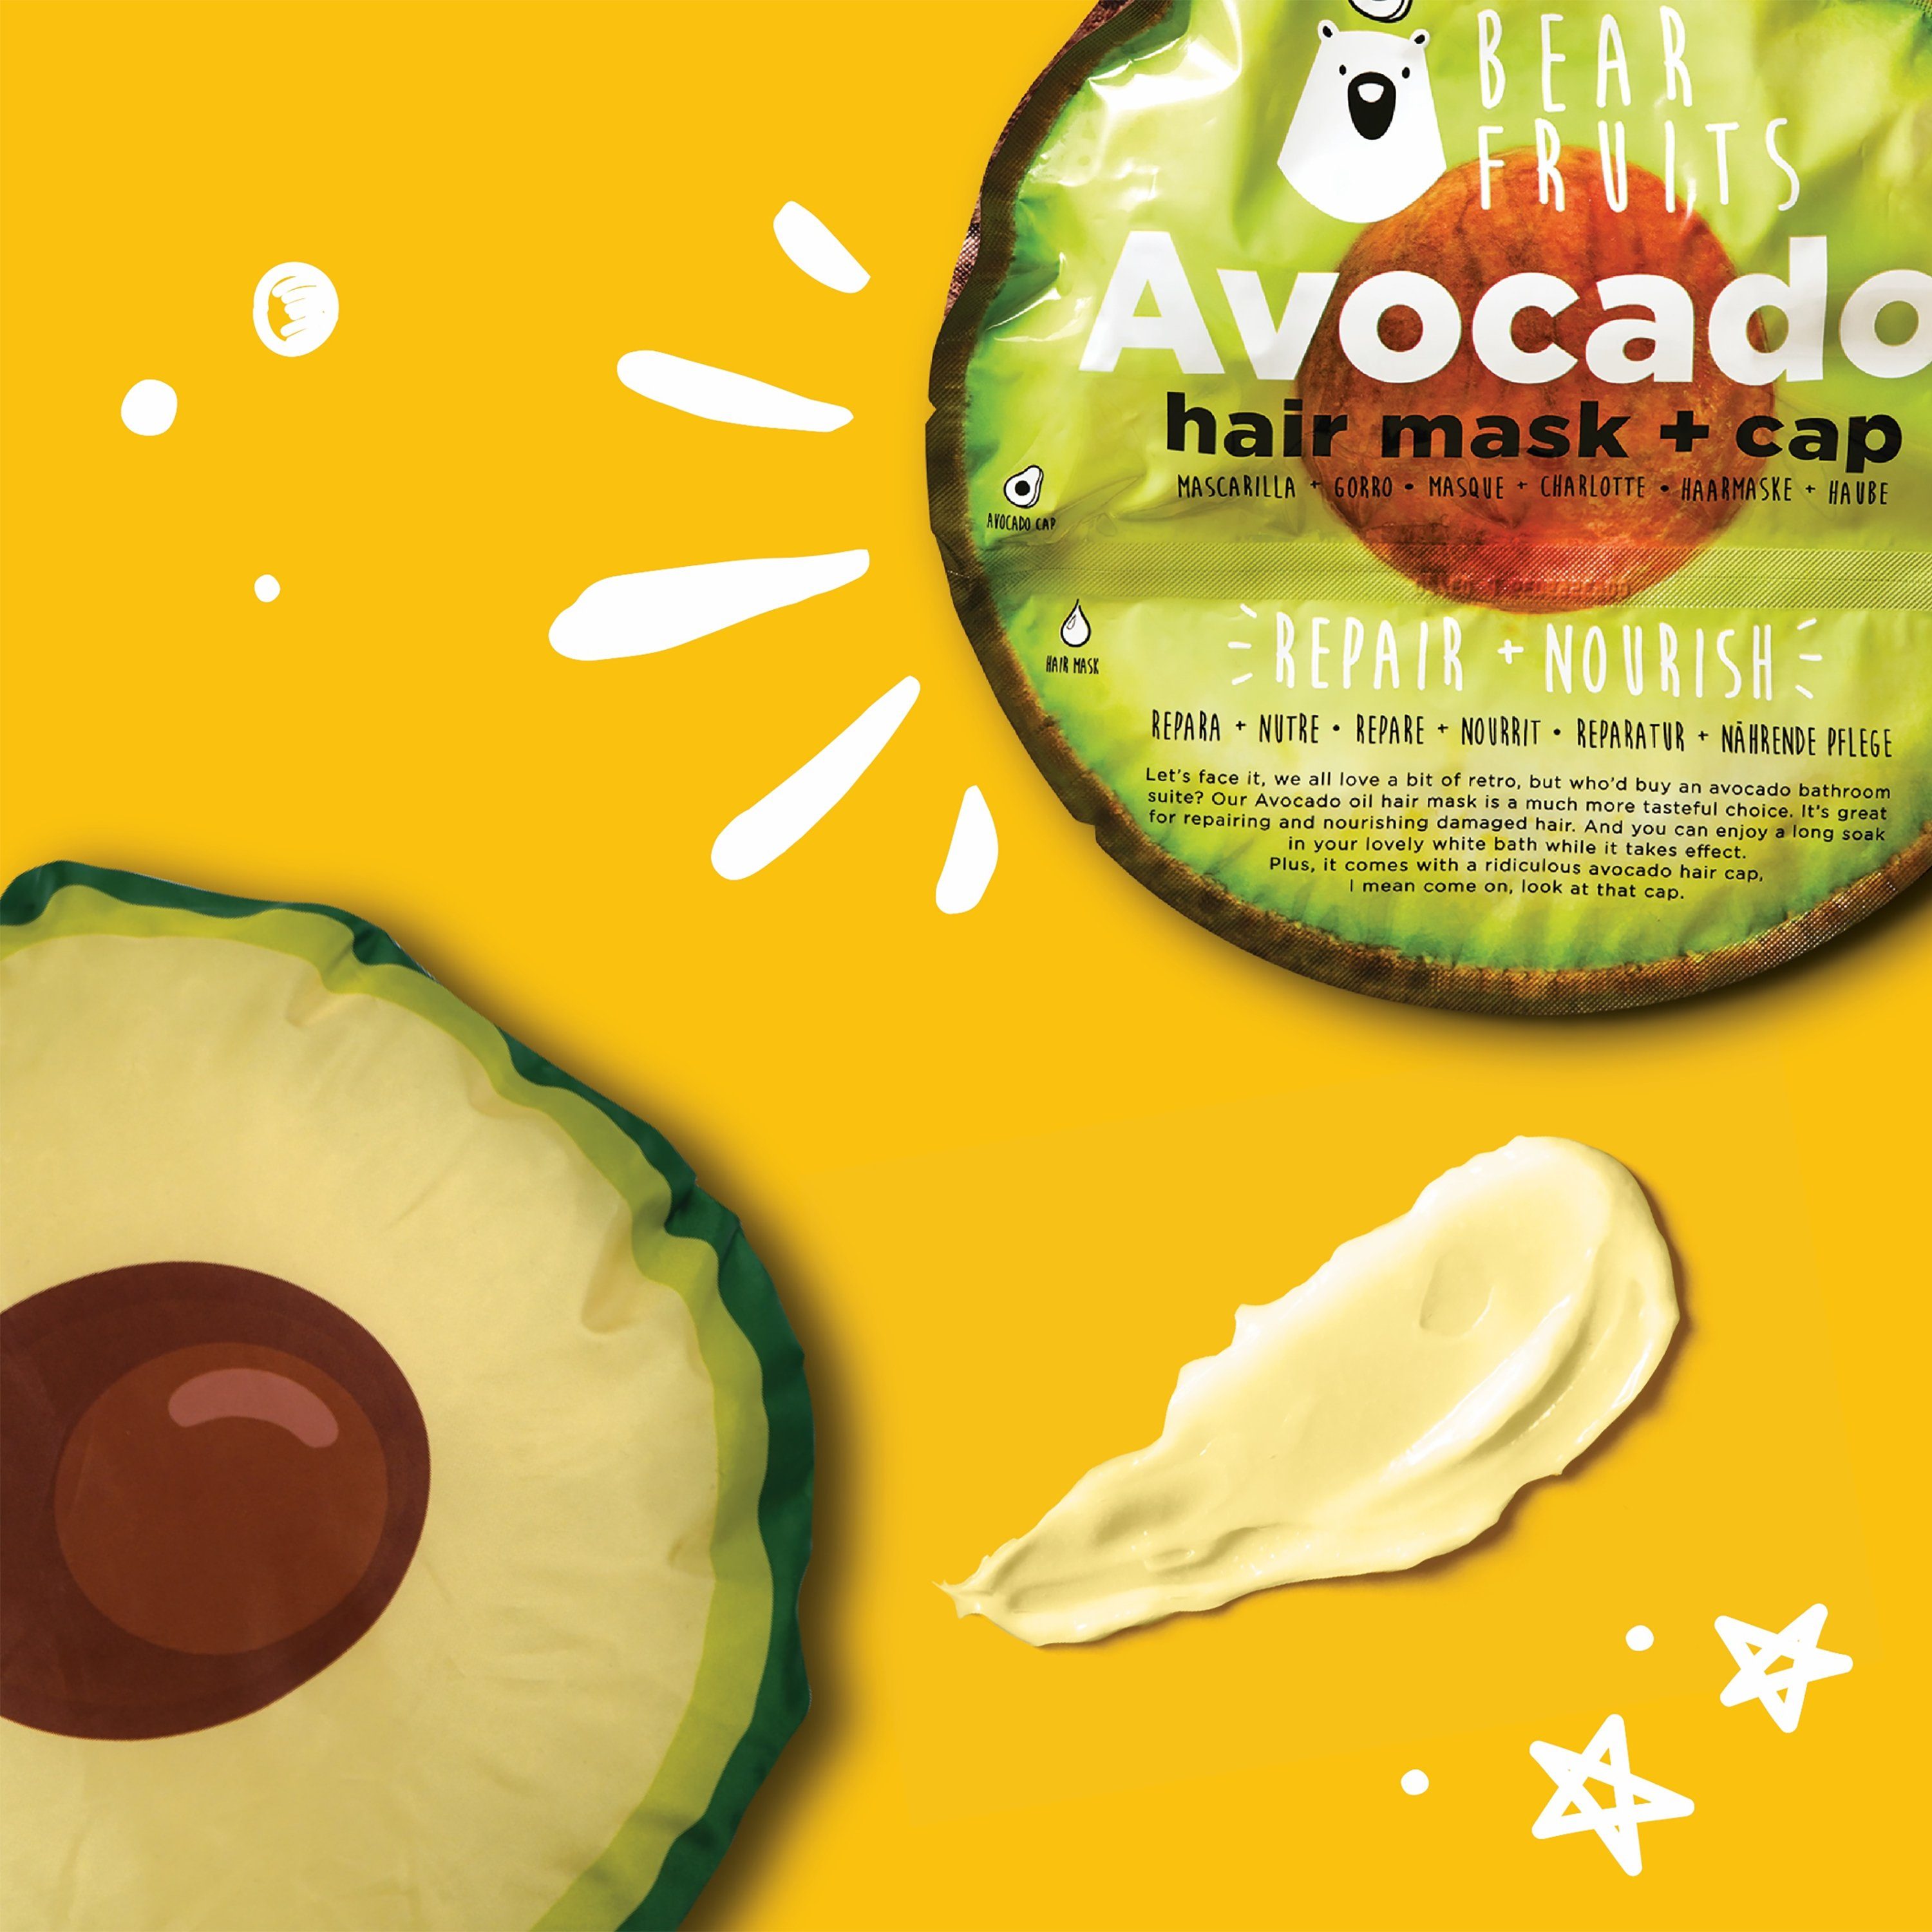 Hair Haarkur Avocado + - cap Bear mask Fruits